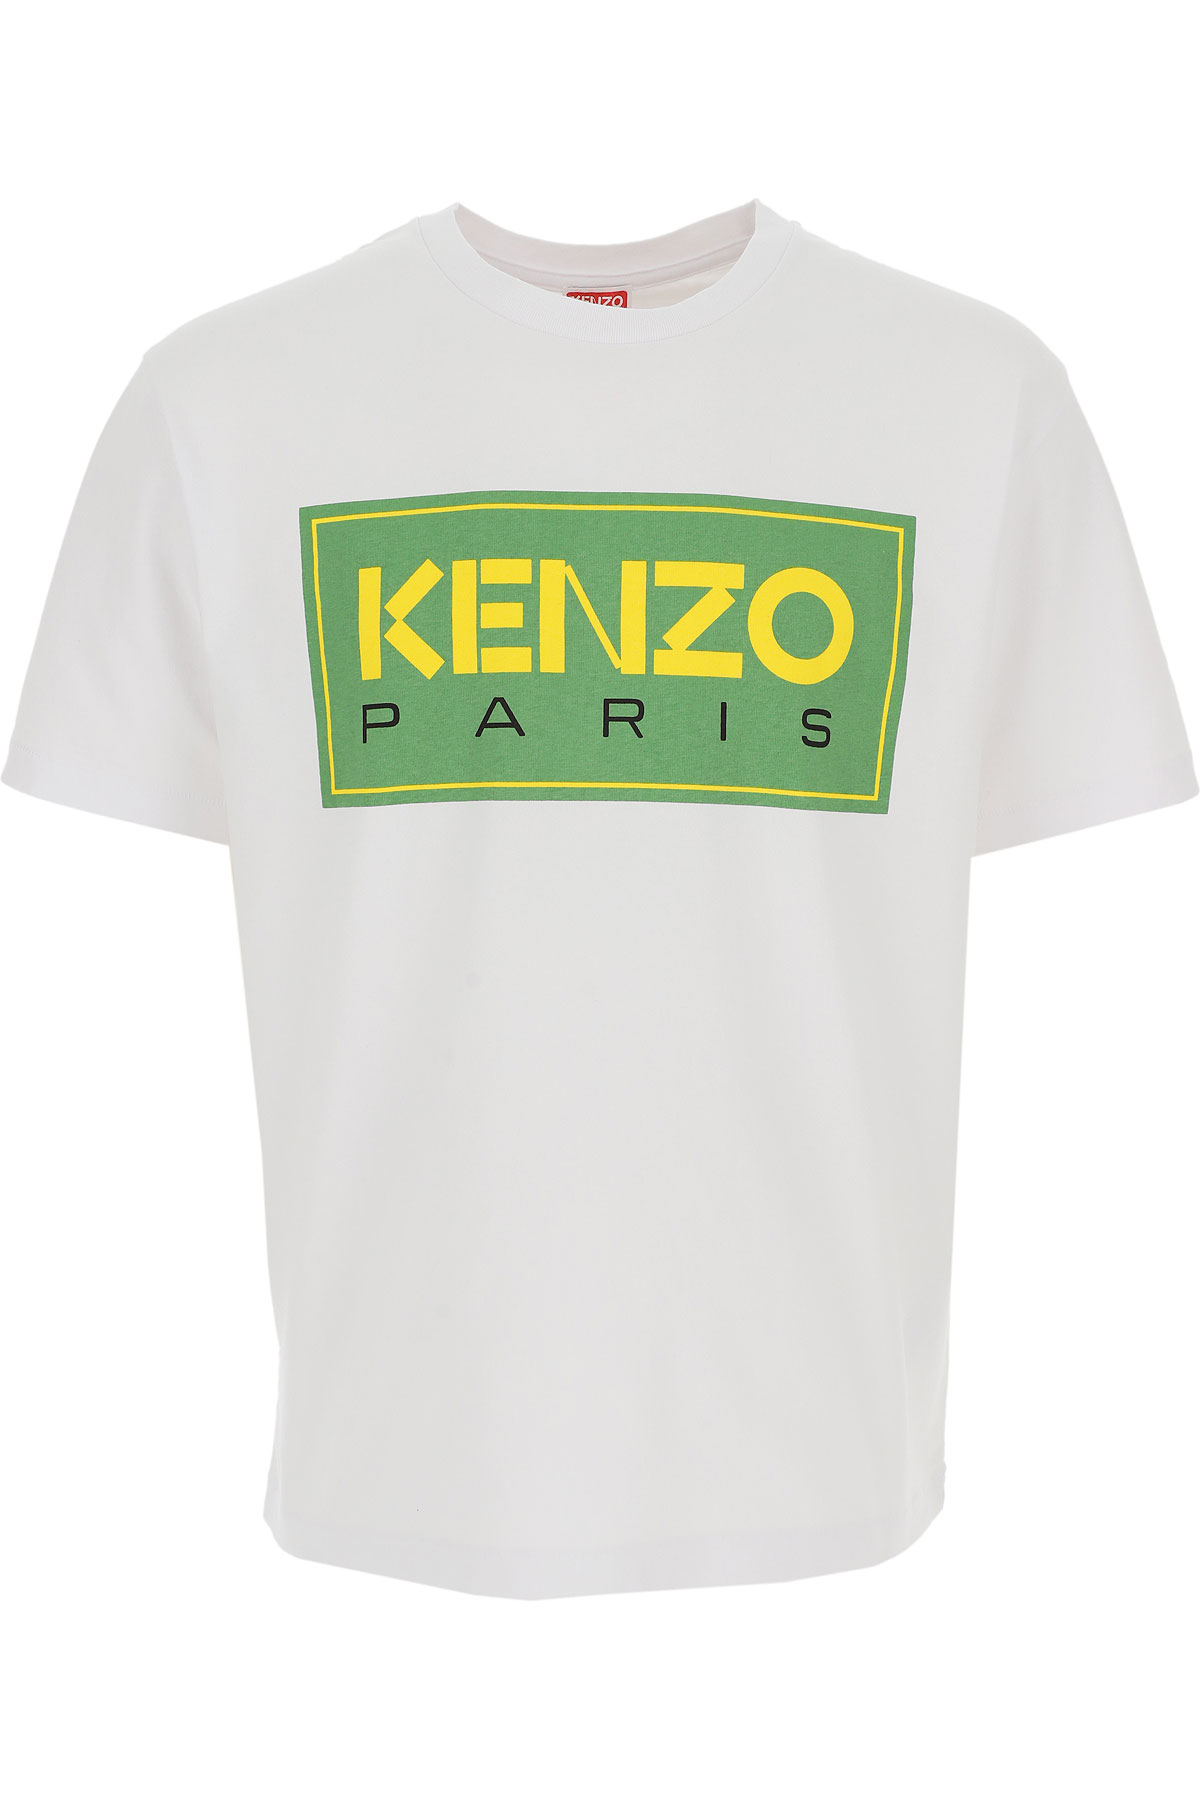 Mens Clothing Kenzo, Style code: pfc65ts4134sy-01-